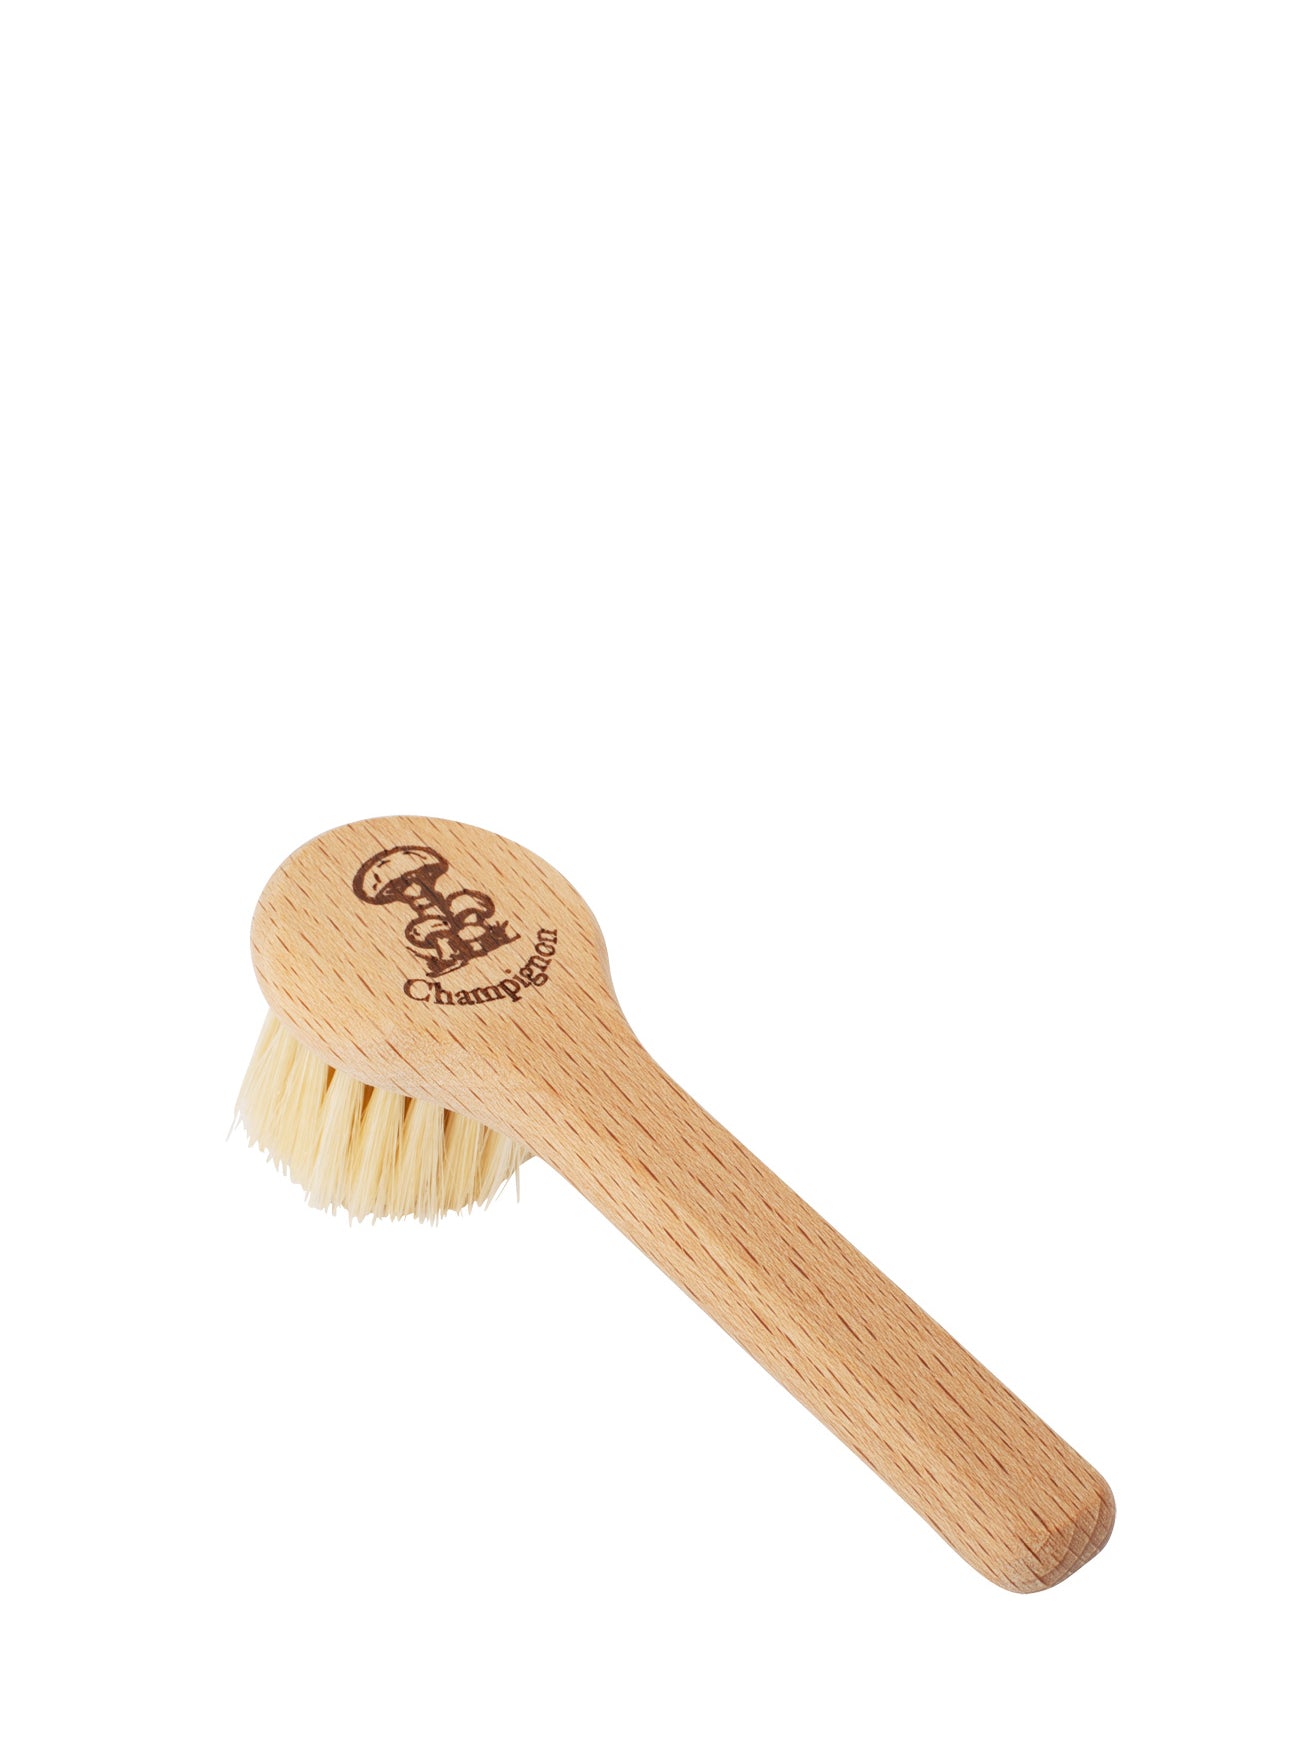 Mushroom brush with handle